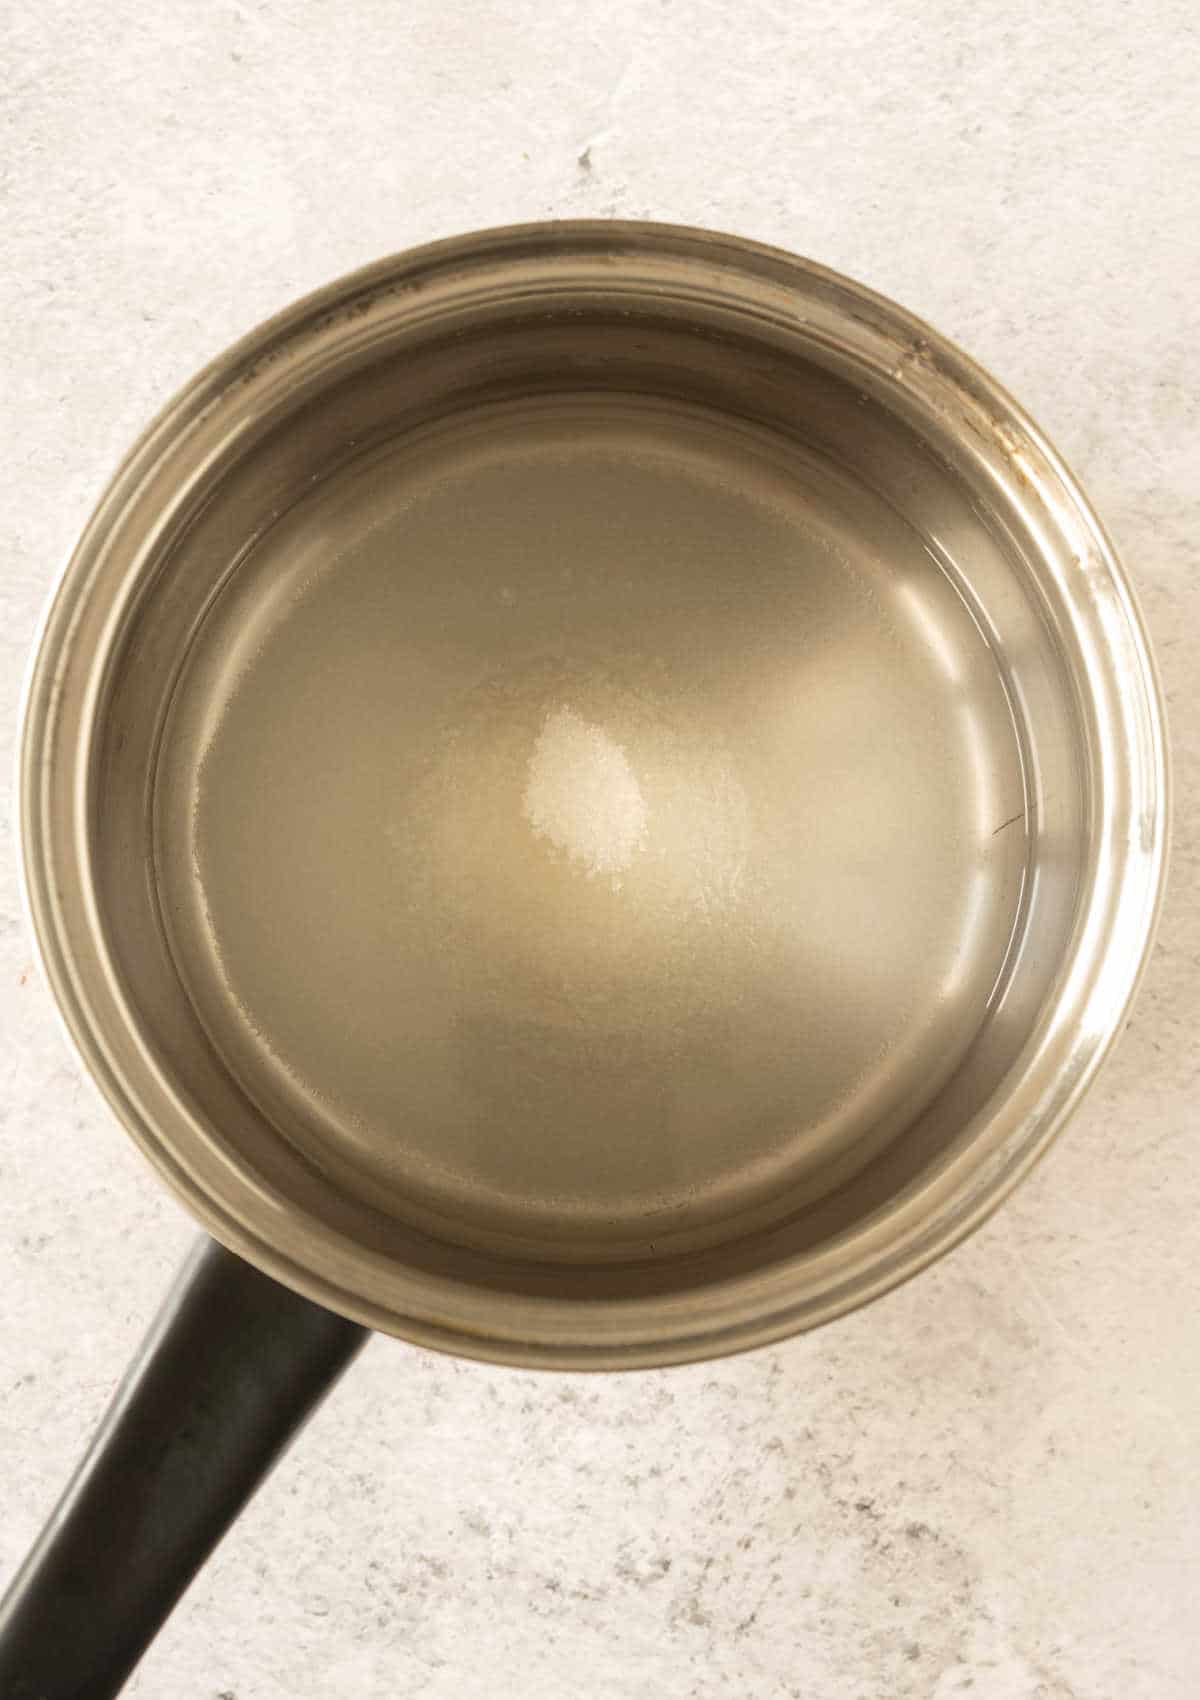 Top view of metal saucepan with water and sugar. Greyish surface.